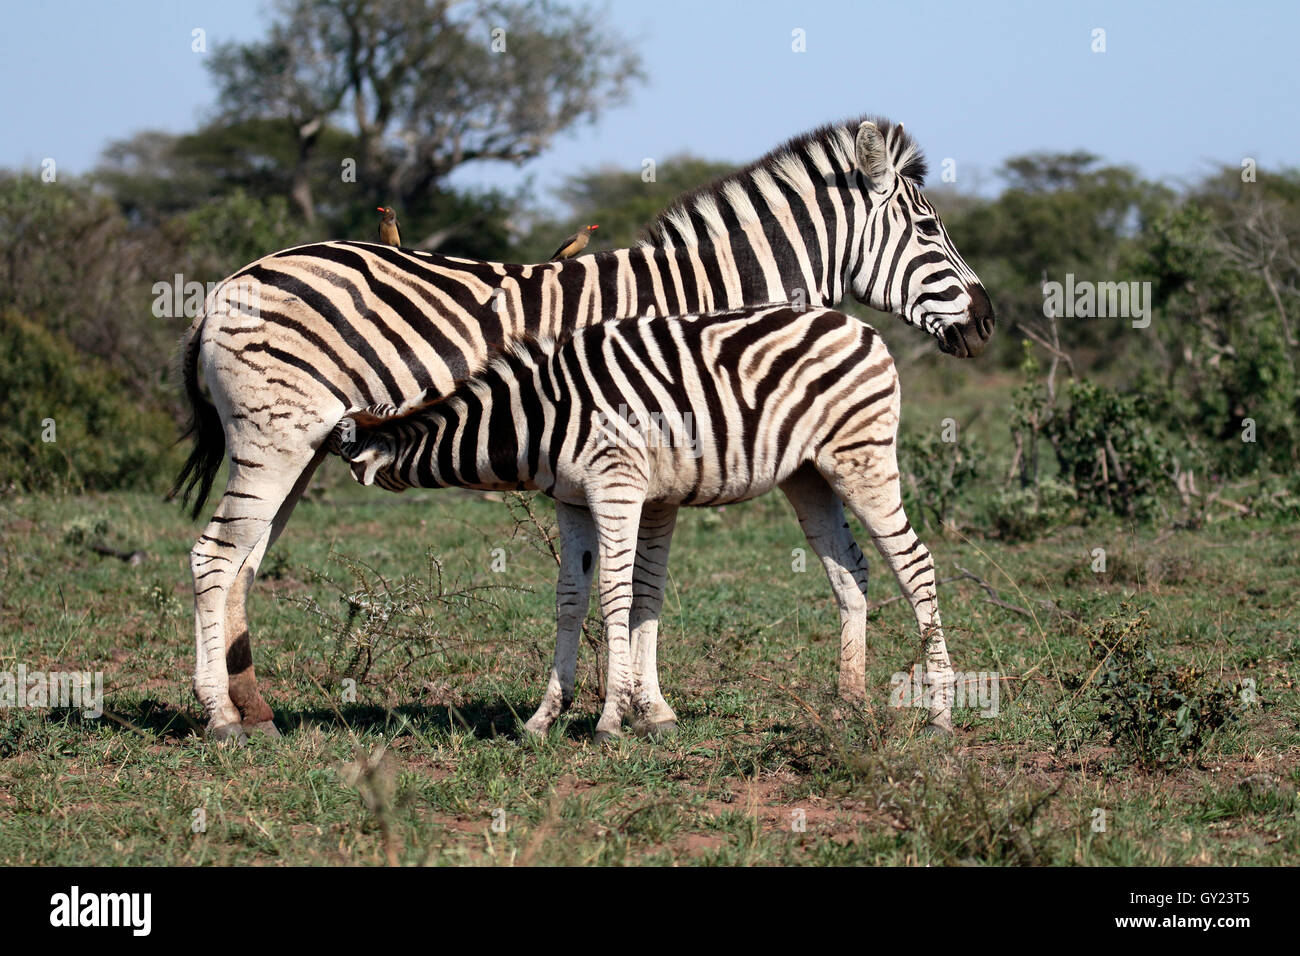 Llanuras, cebra Cebra común o Burchells, zebra Equus quagga, madre y joven, Namibia, agosto de 2016 Foto de stock